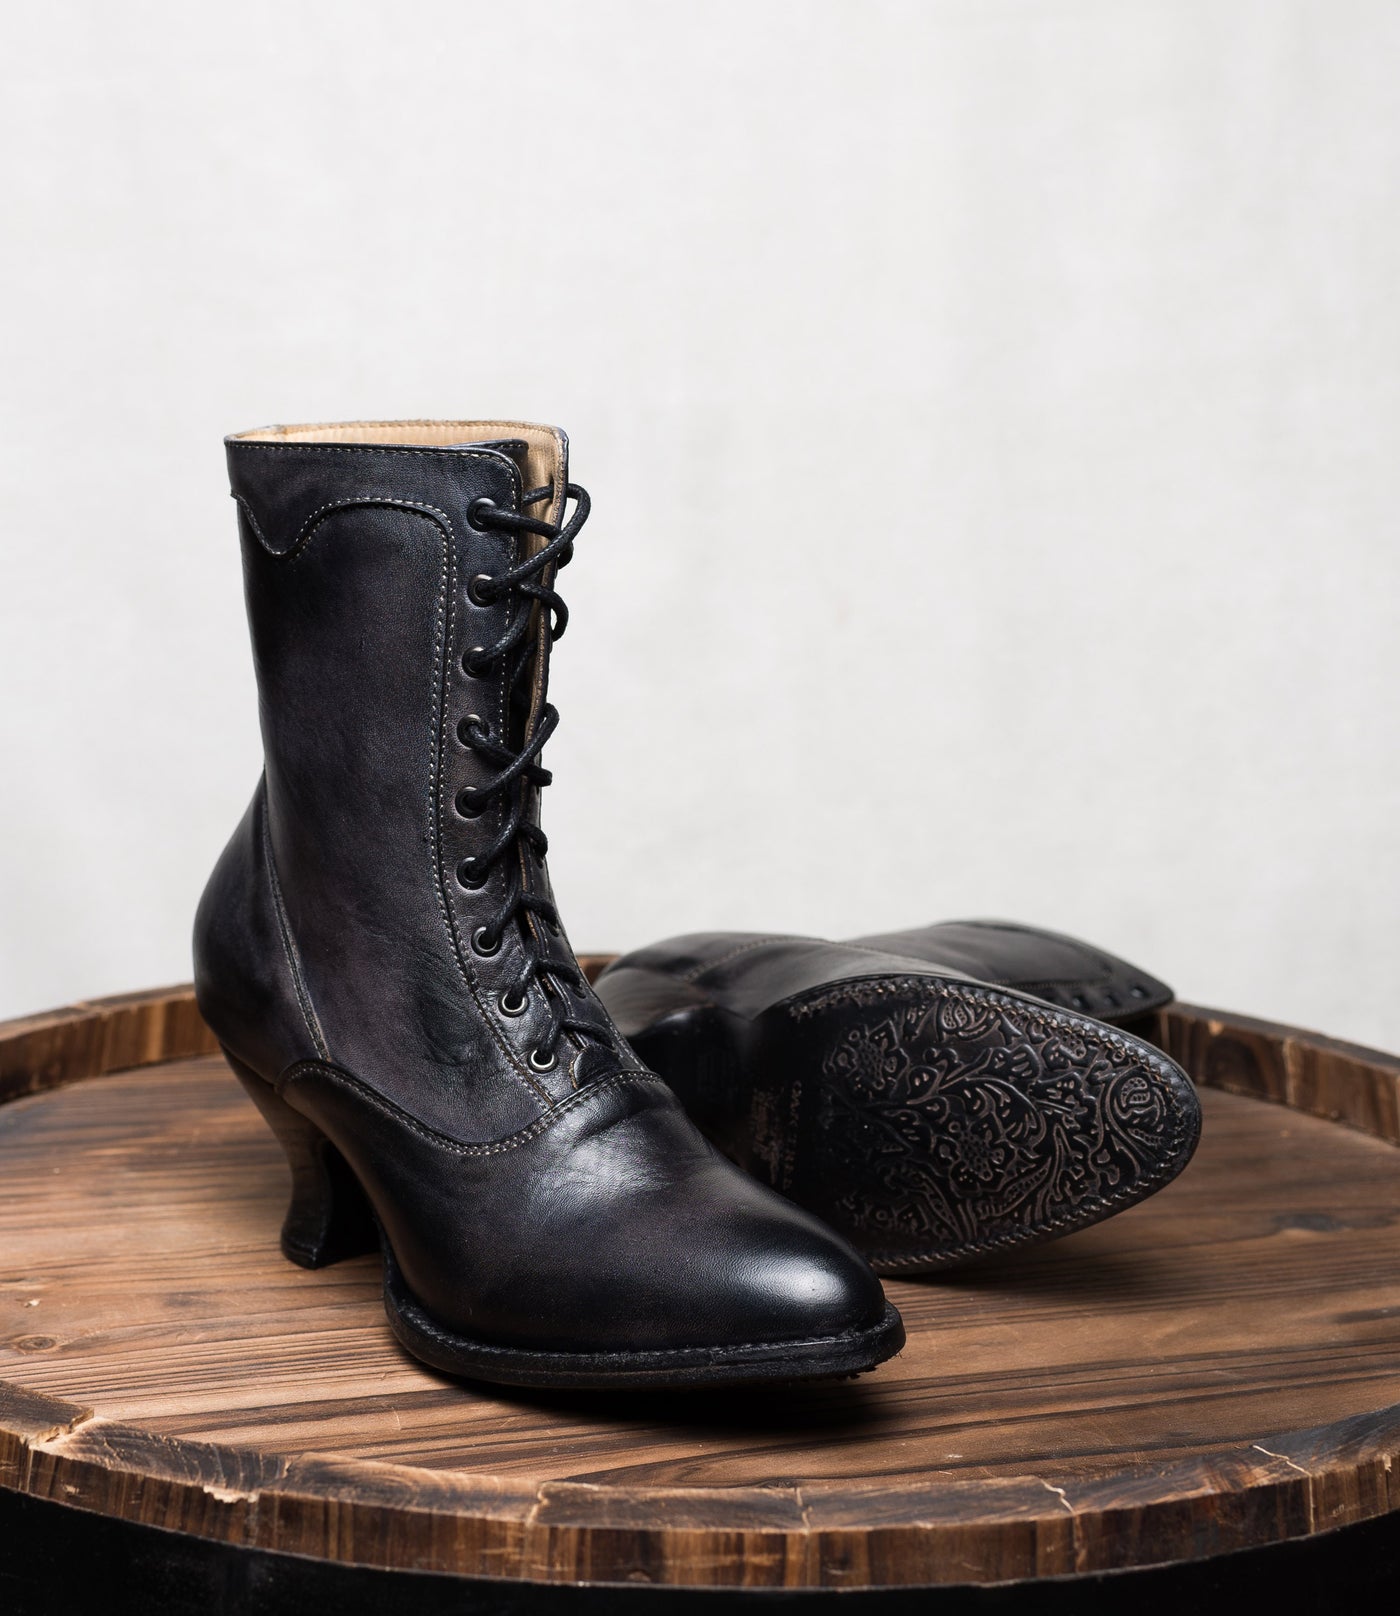 Modern Vintage Boots in Black Rustic